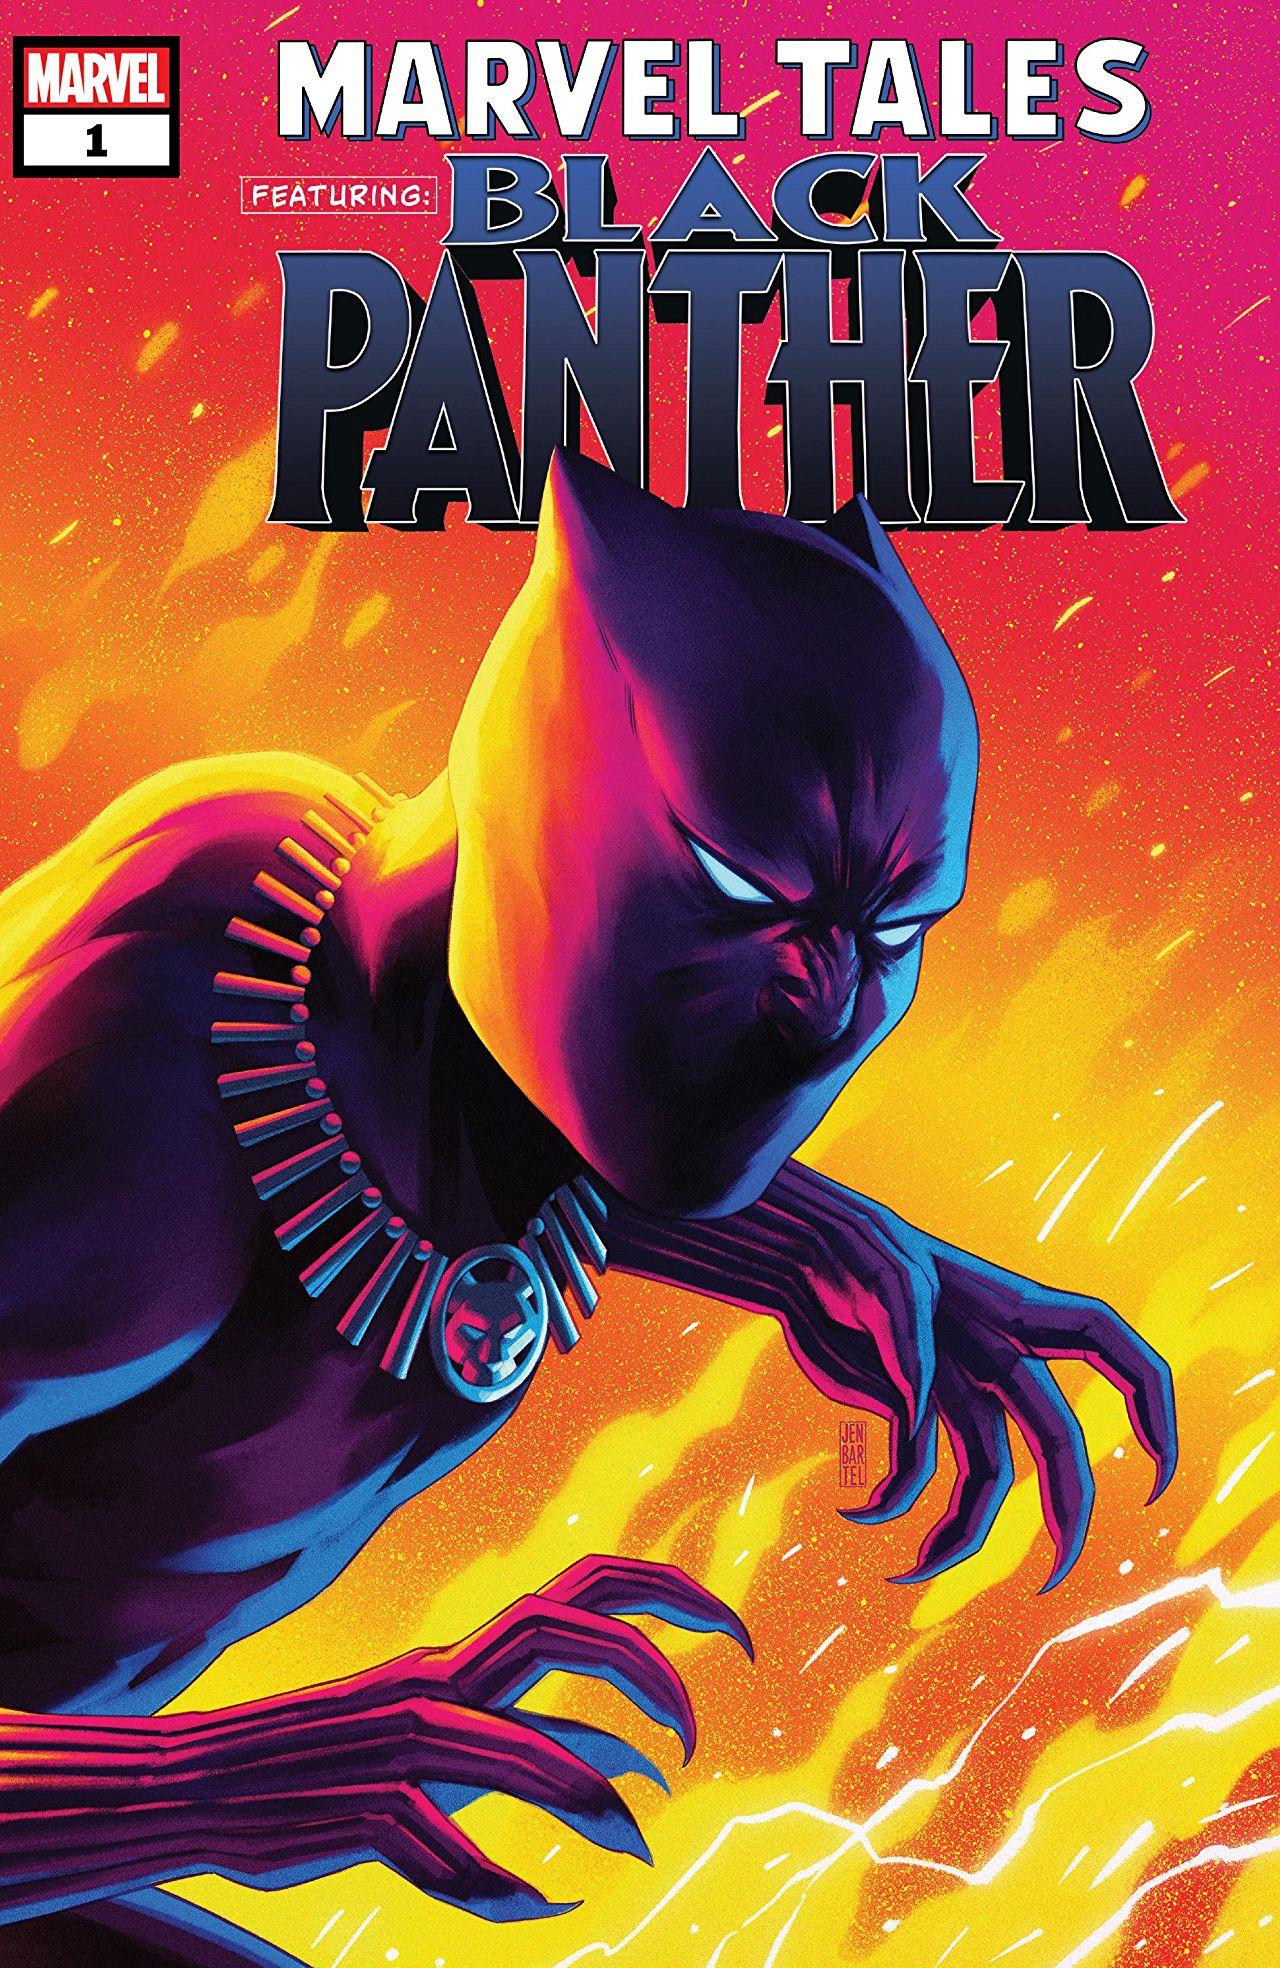 Marvel Tales: Black Panther Vol. 1 #1